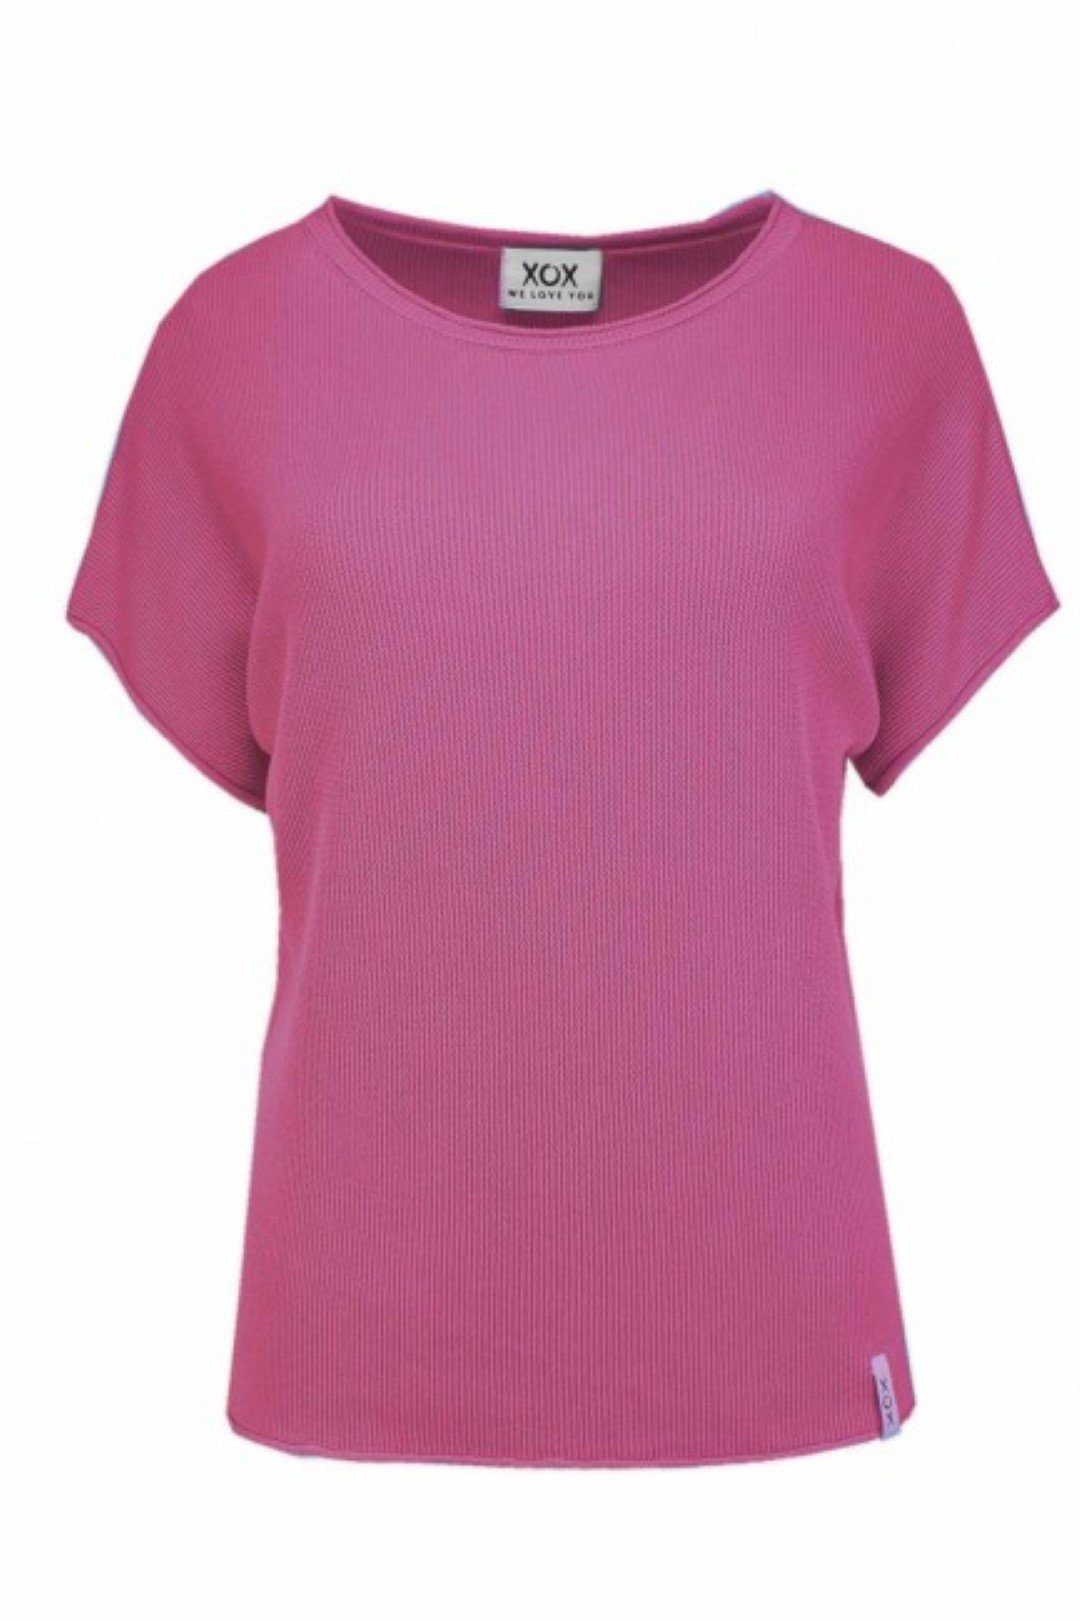 XOX T-Shirt XOX Pullunder Rundhals, kurzarm, Boxy Shirt pink - Fair Trade, Oberteil, Shirt, Damenmode